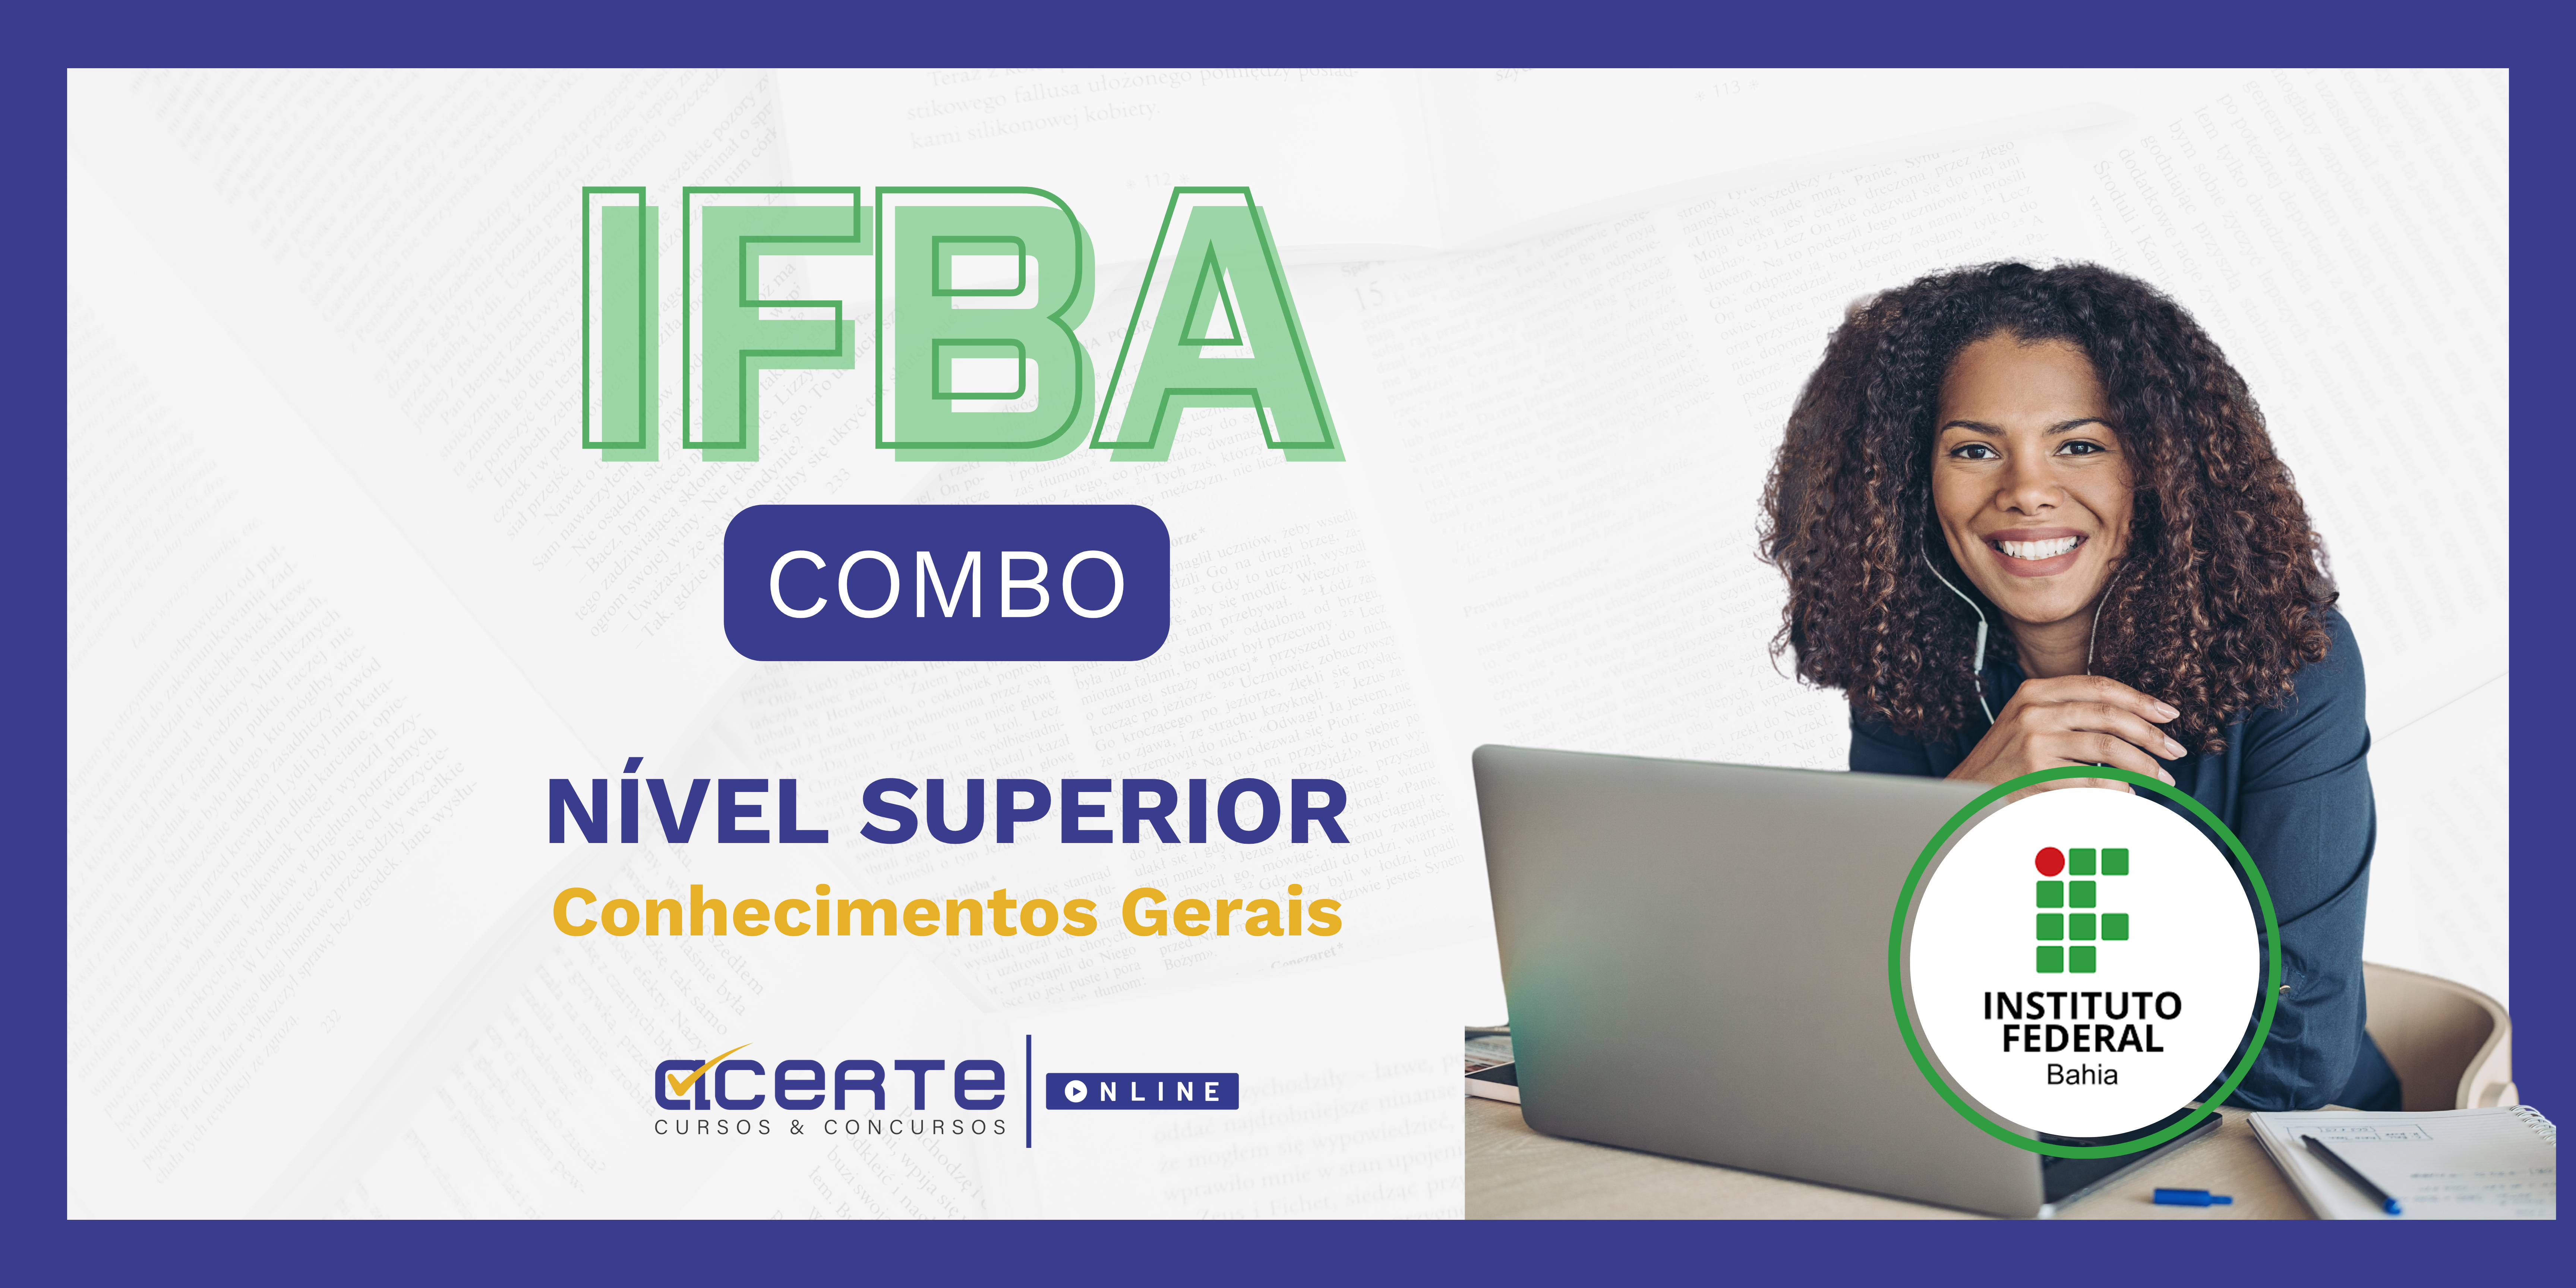 IFBA COMBO - Nível Superior - Conhecimentos Gerais - Edital Publicado - ONLINE